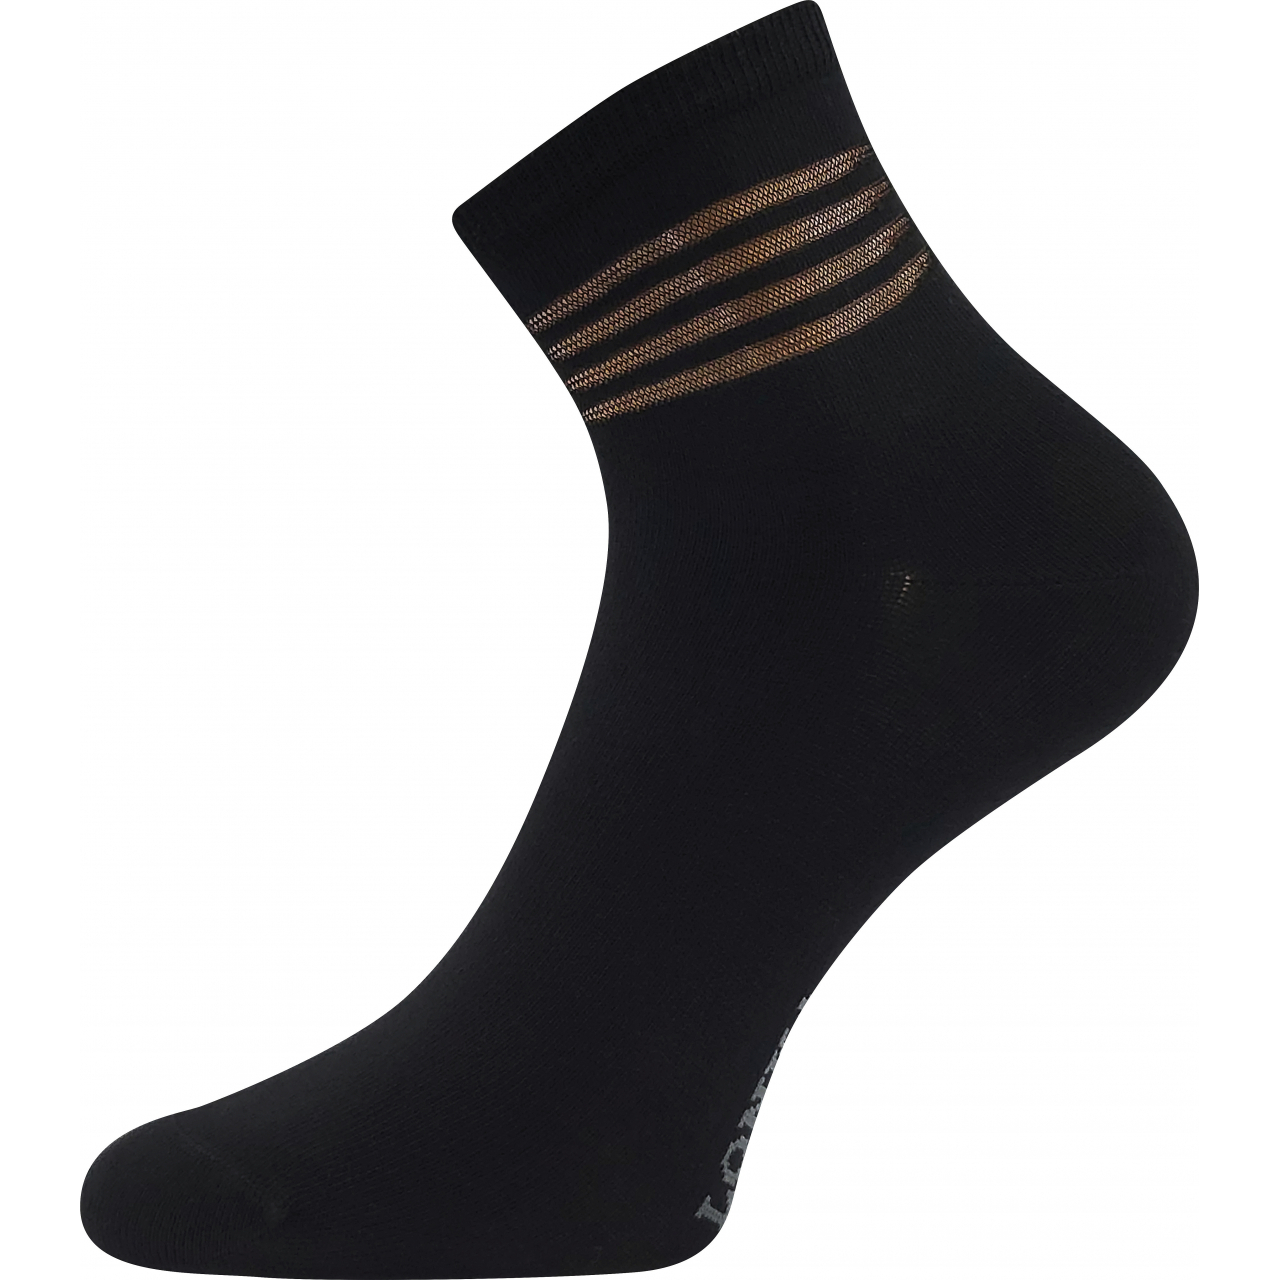 Ponožky dámské Lonka Fasketa - černé, 35-38